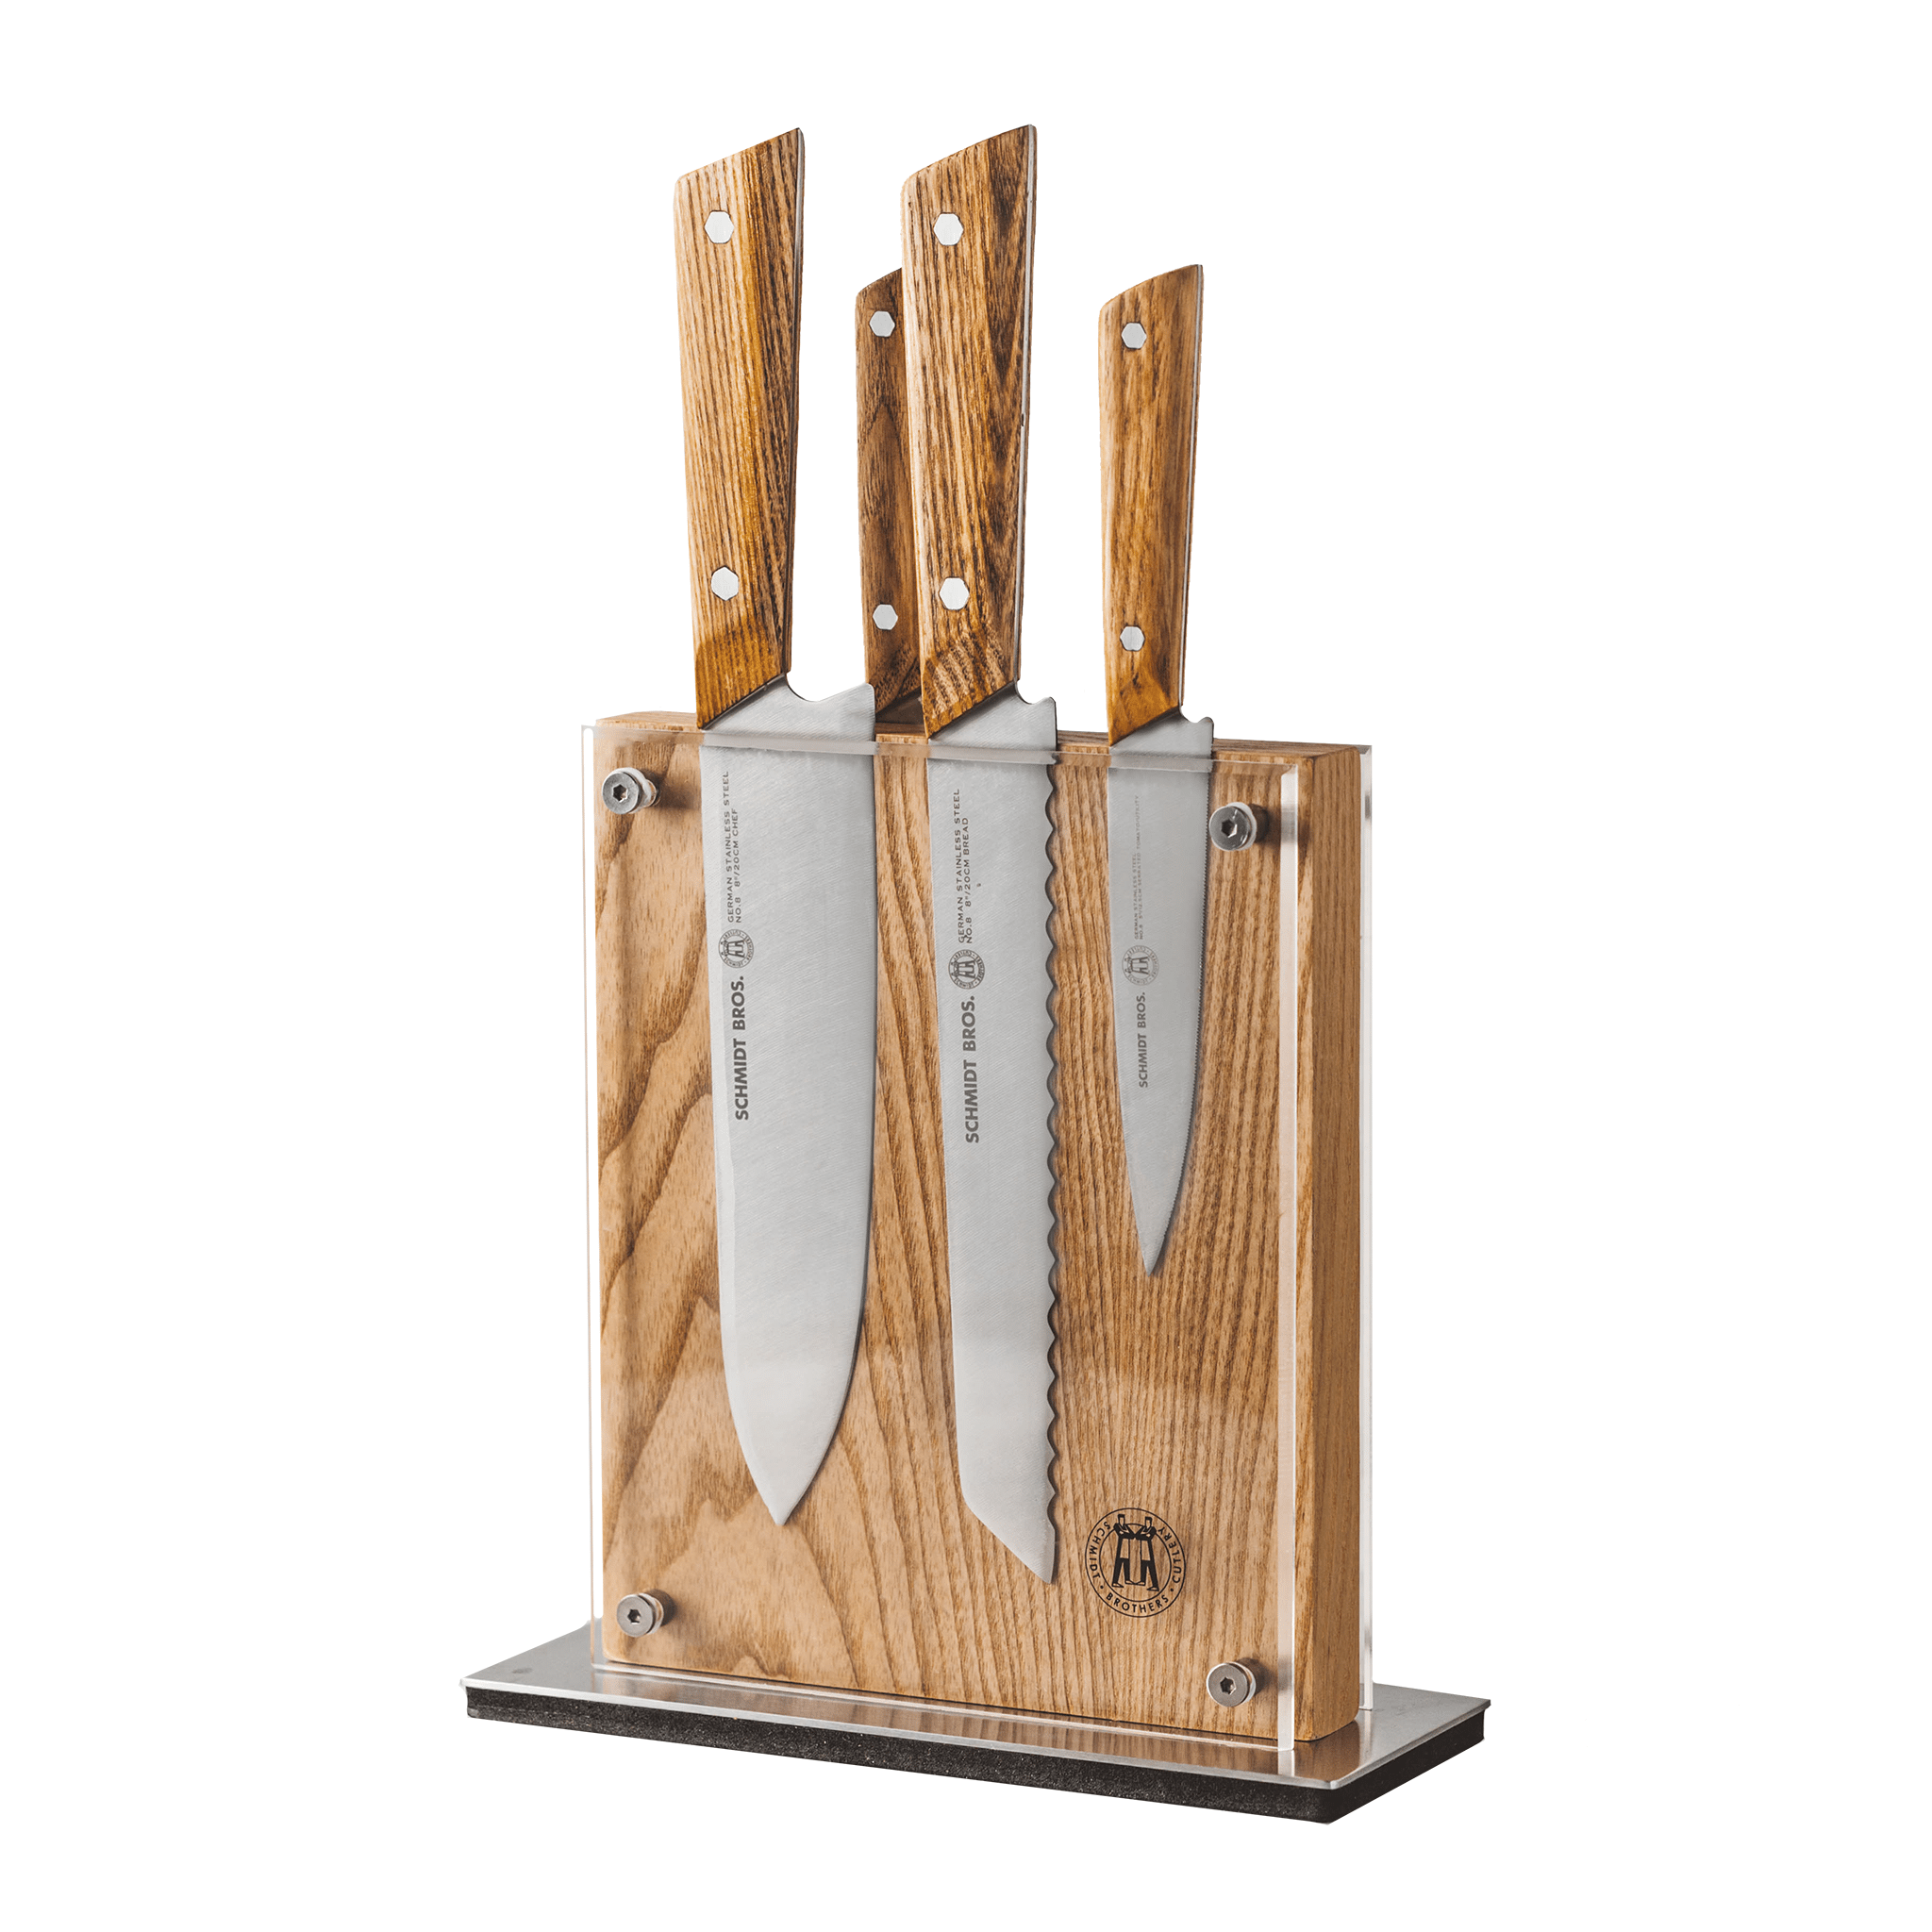 Schmidt Bros Legacy Series, 5 PC Ultra Sharp Knife Set + Blade Guards